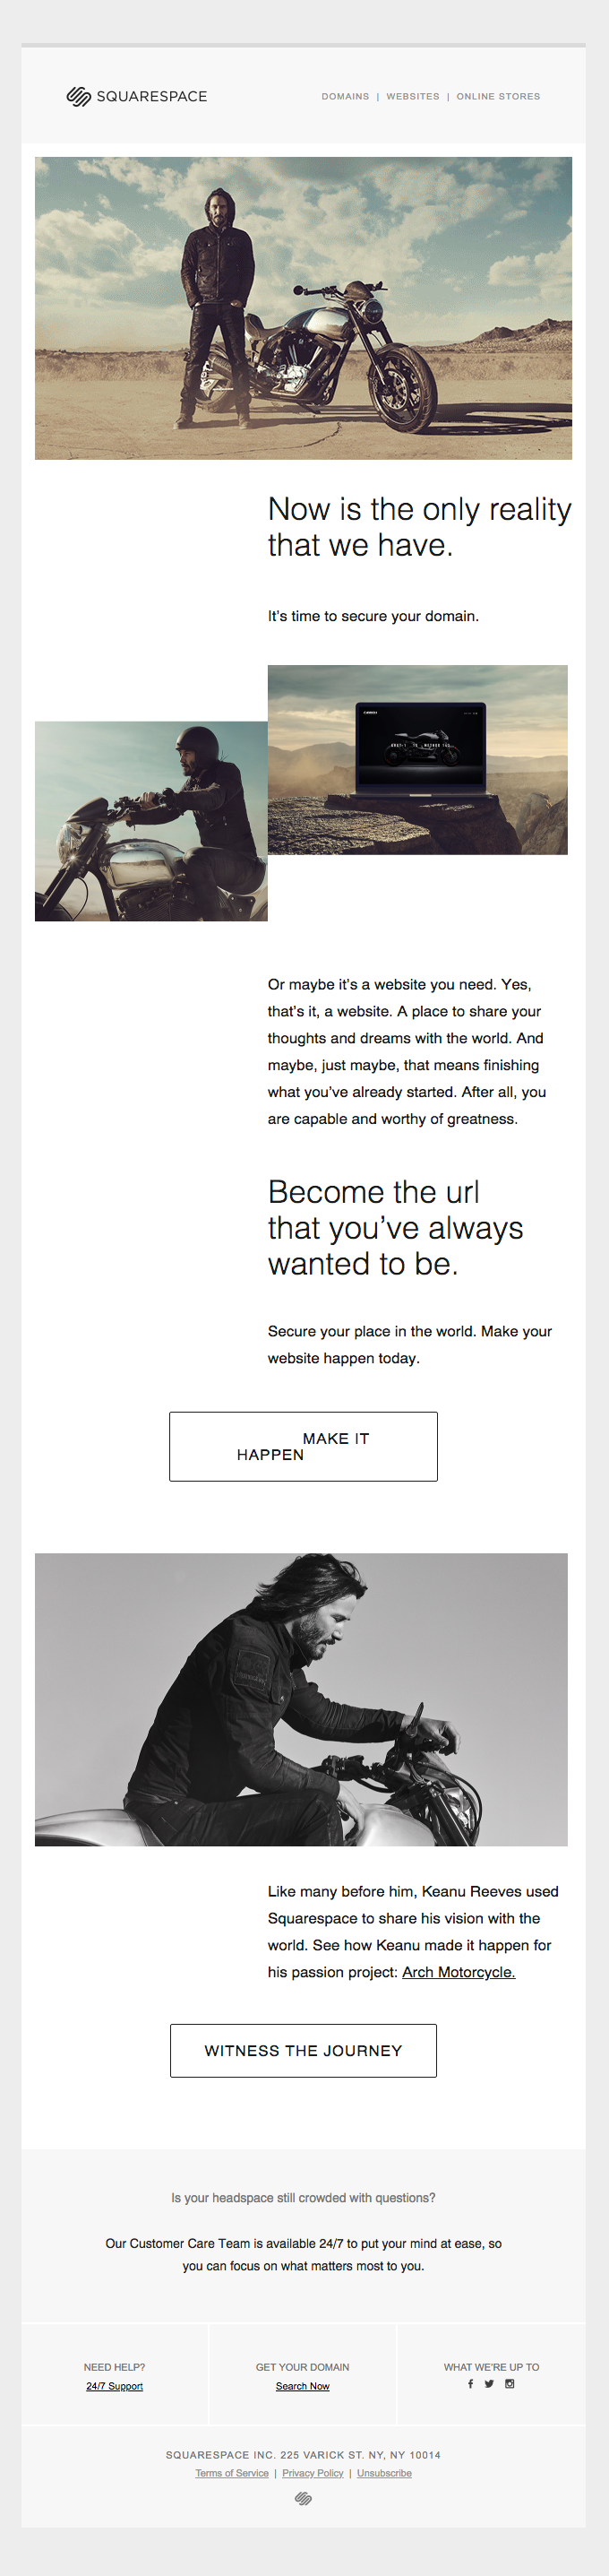 Keanu Reeves believes you can make it happen